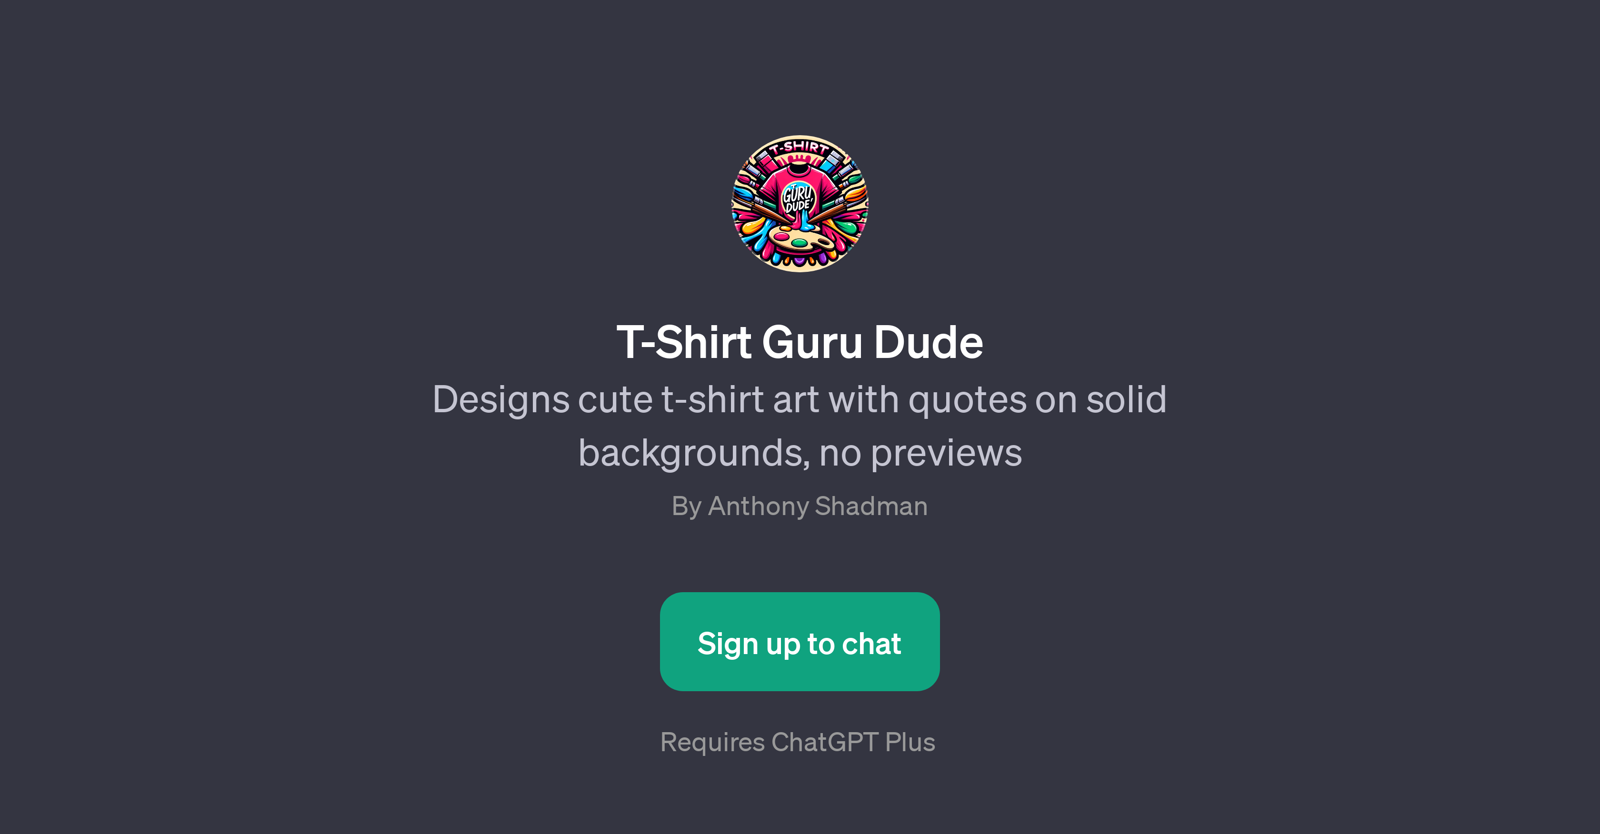 T-Shirt Guru Dude website